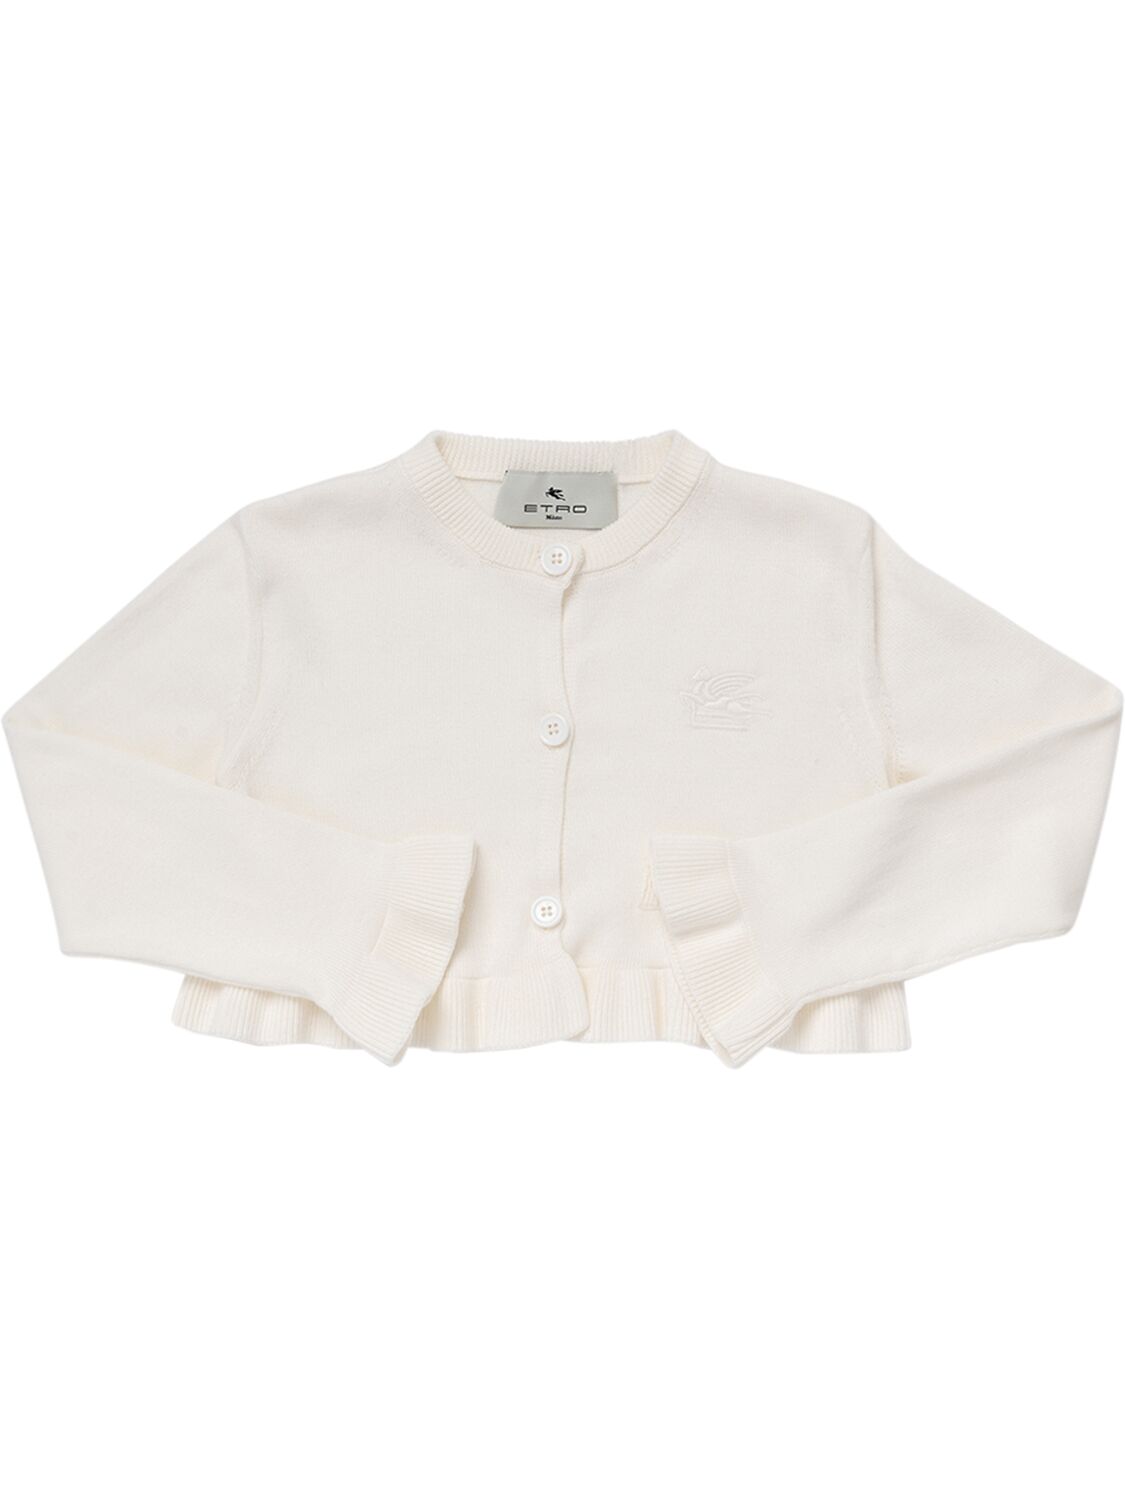 Etro Kids' Cotton Knit Cardigan In Ivory